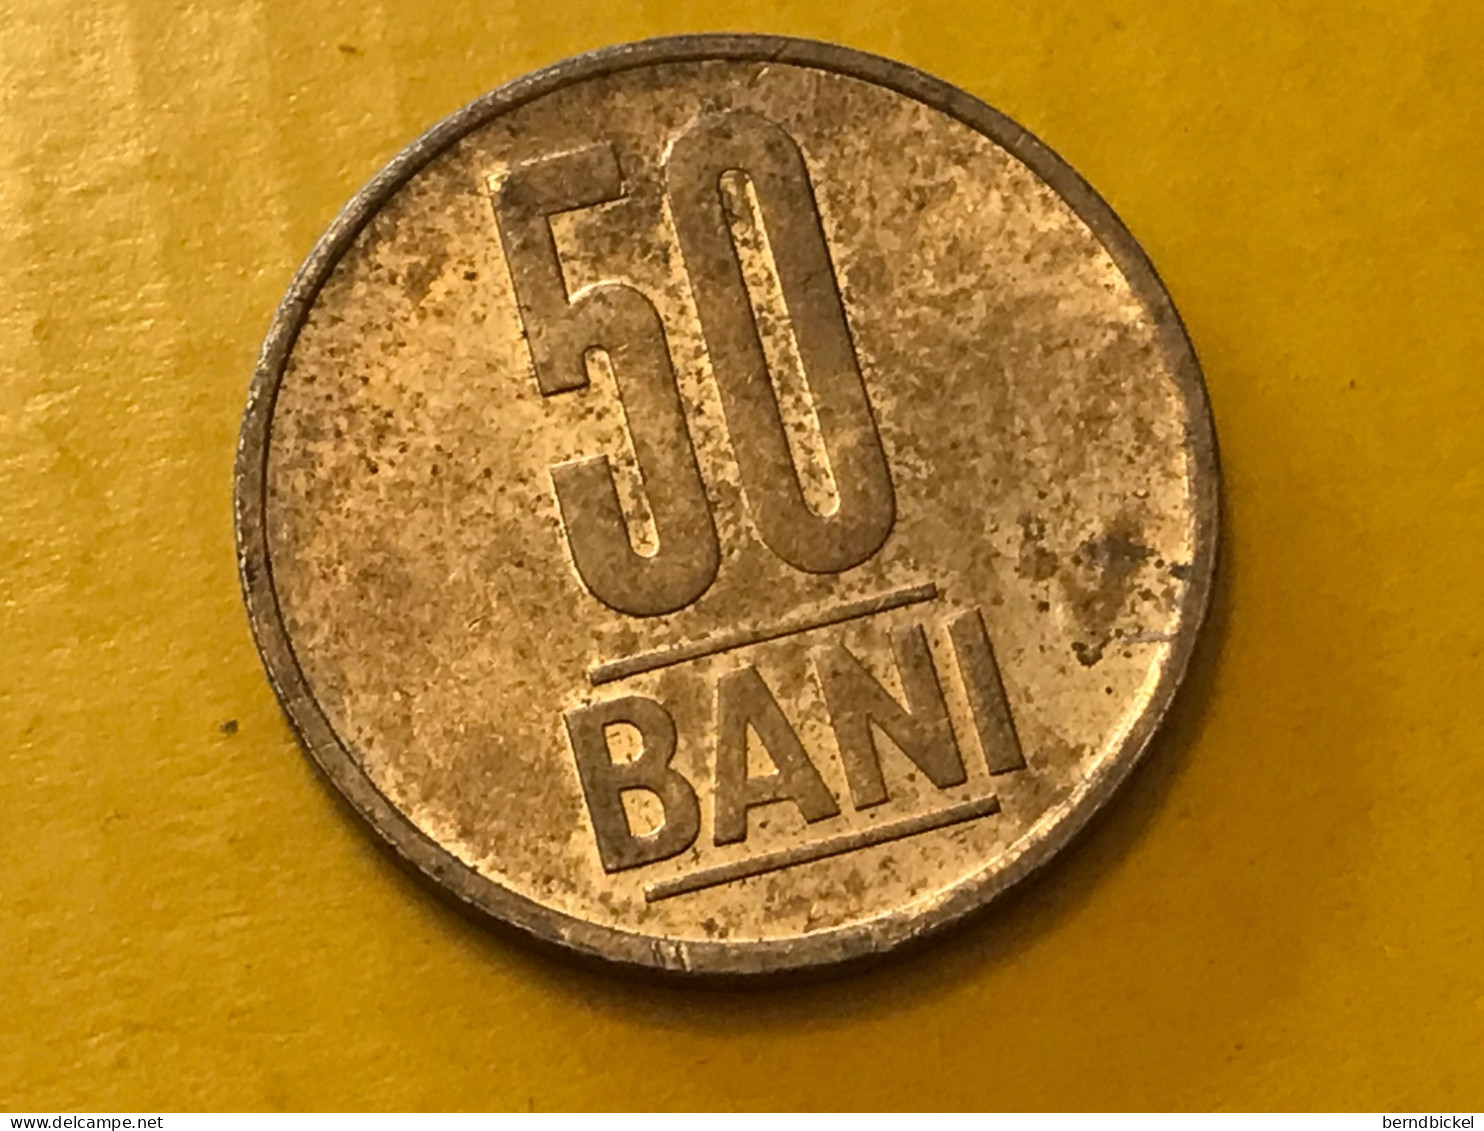 Münze Münzen Umlaufmünze Rumänien 50 Bani 2016 - Romania